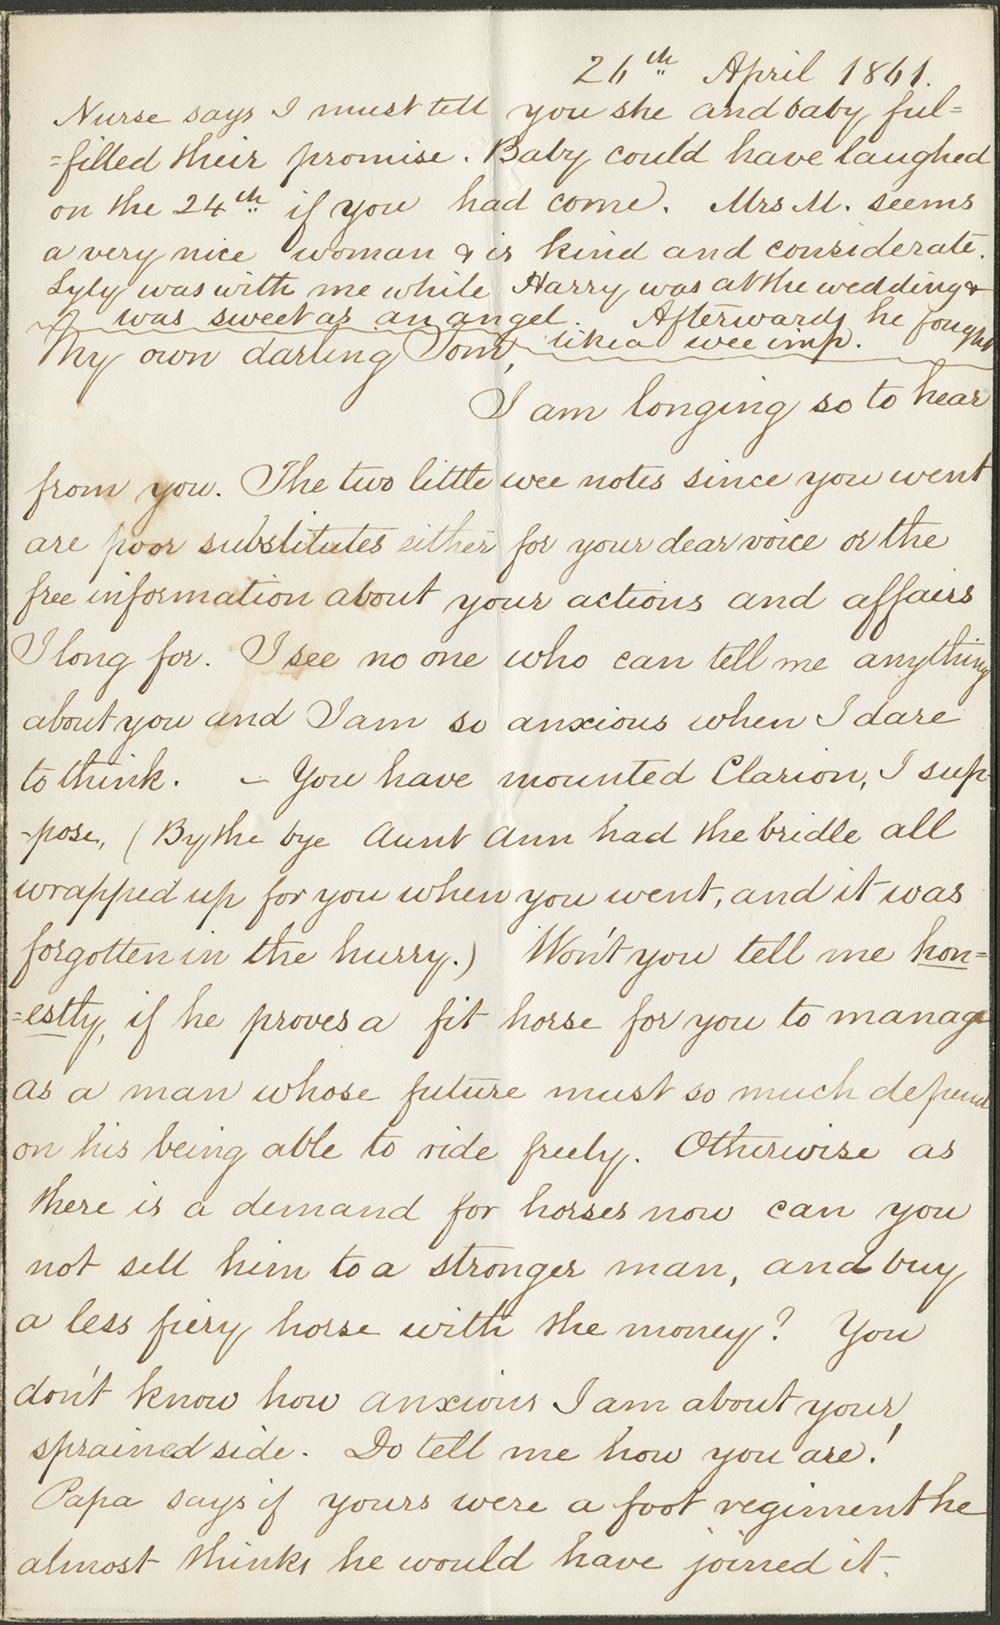 Elizabeth Kane to Thomas L. Kane 26 April, 1861 (Vault MSS 792, Box 21, Folder 1, Item 3)